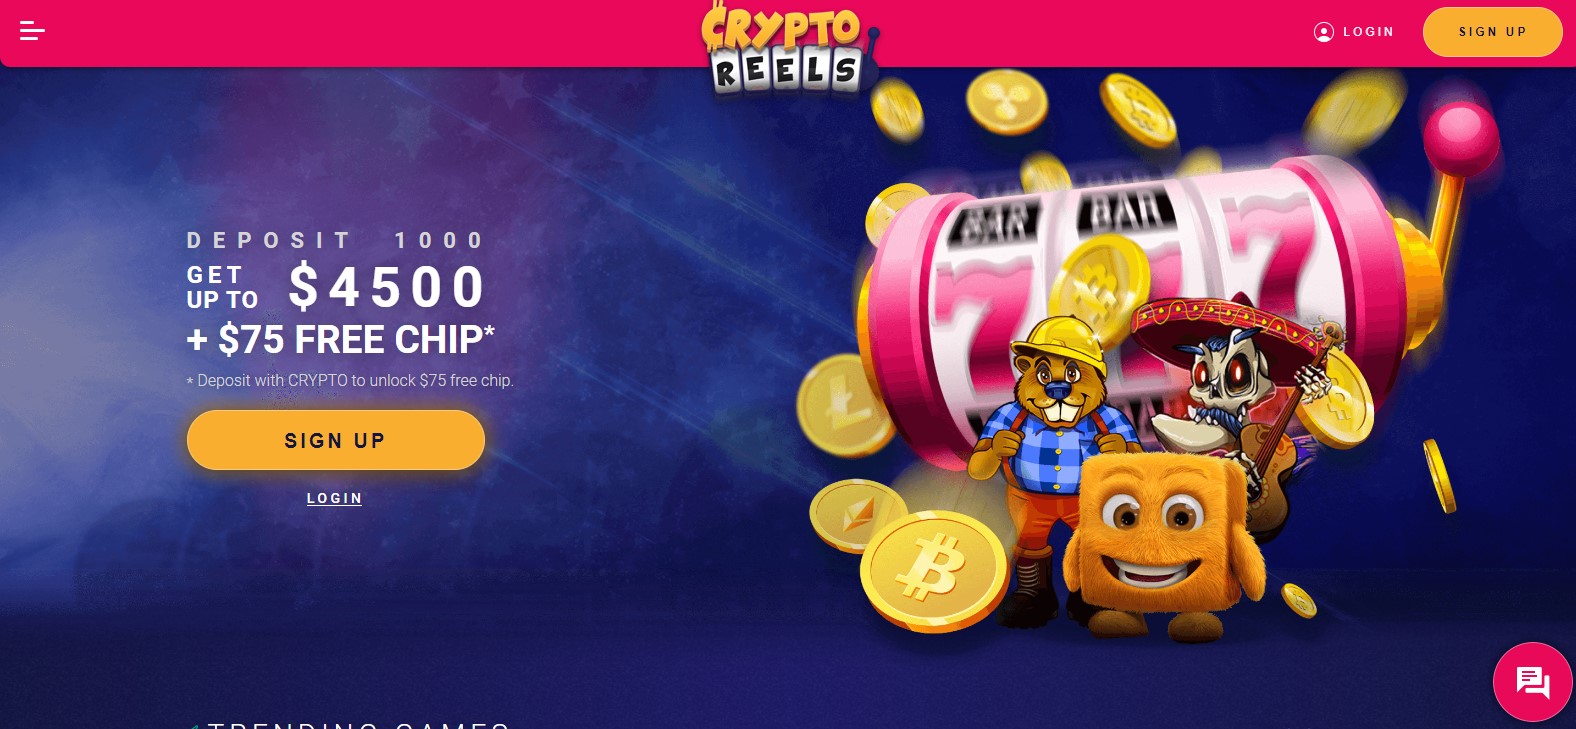 CryptoReels Online Casino Welcome Bonus